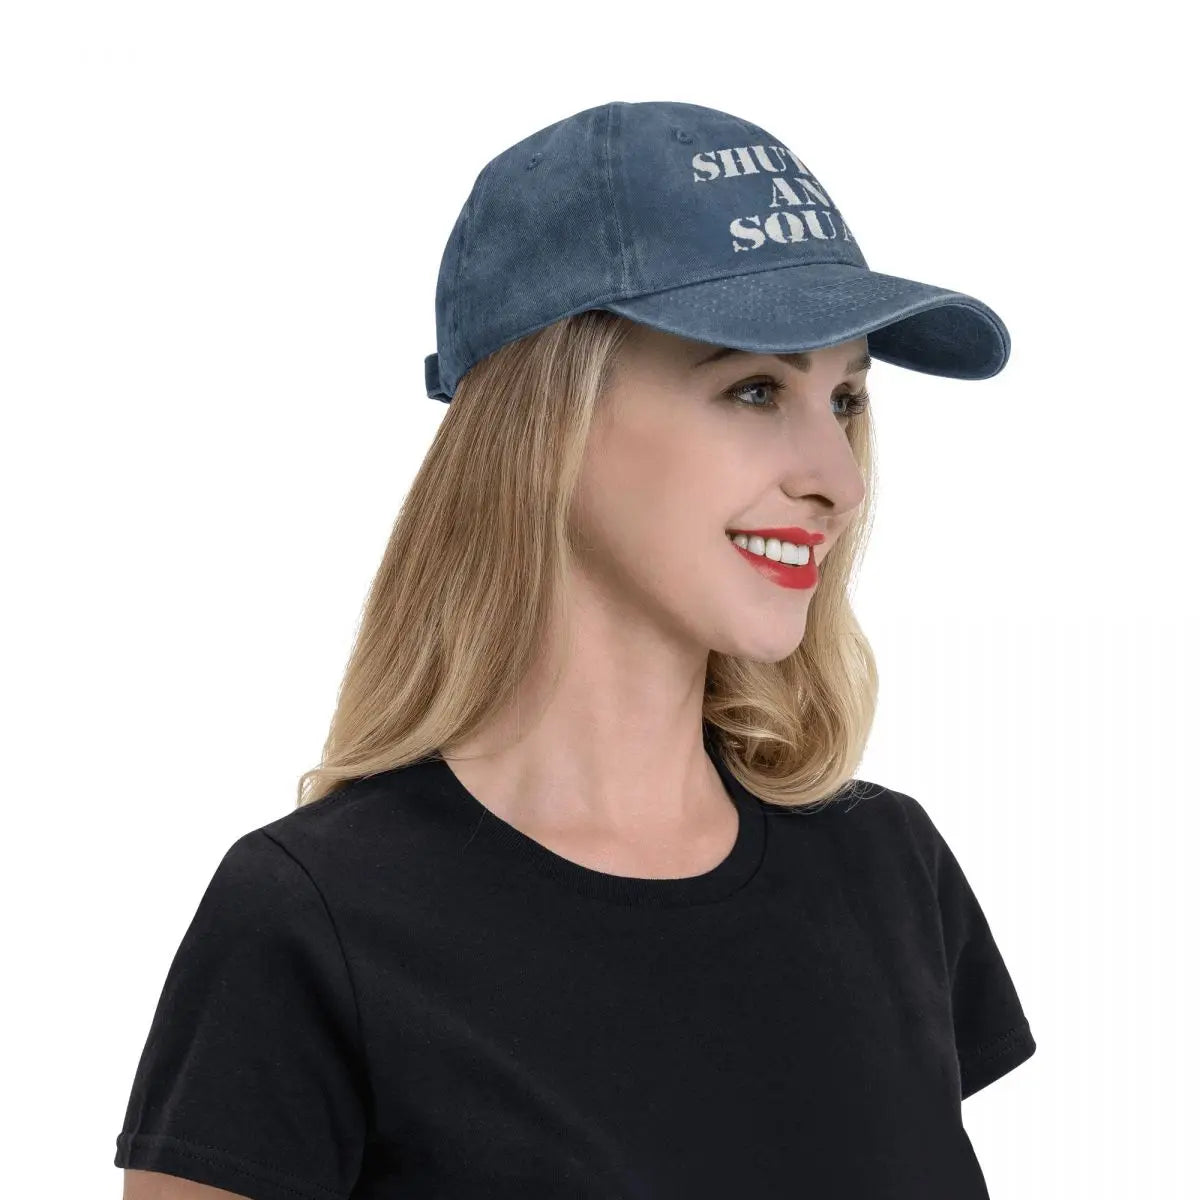 "SHUT UP AND SQUAT" Gym Hat (UNISEX)